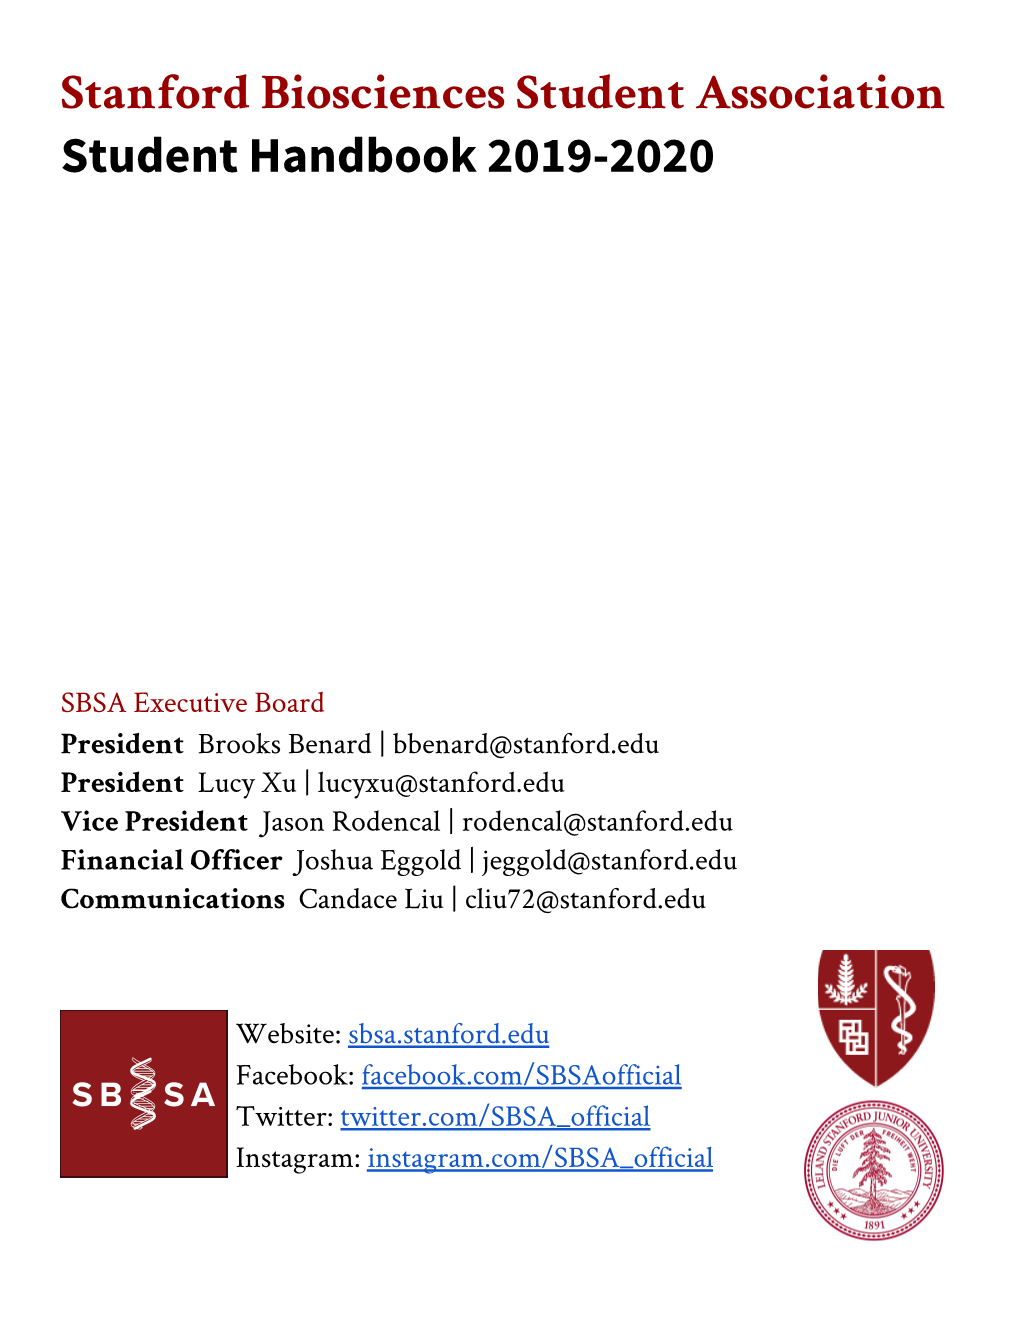 Stanford Biosciences Student Association Student Handbook 2019-2020